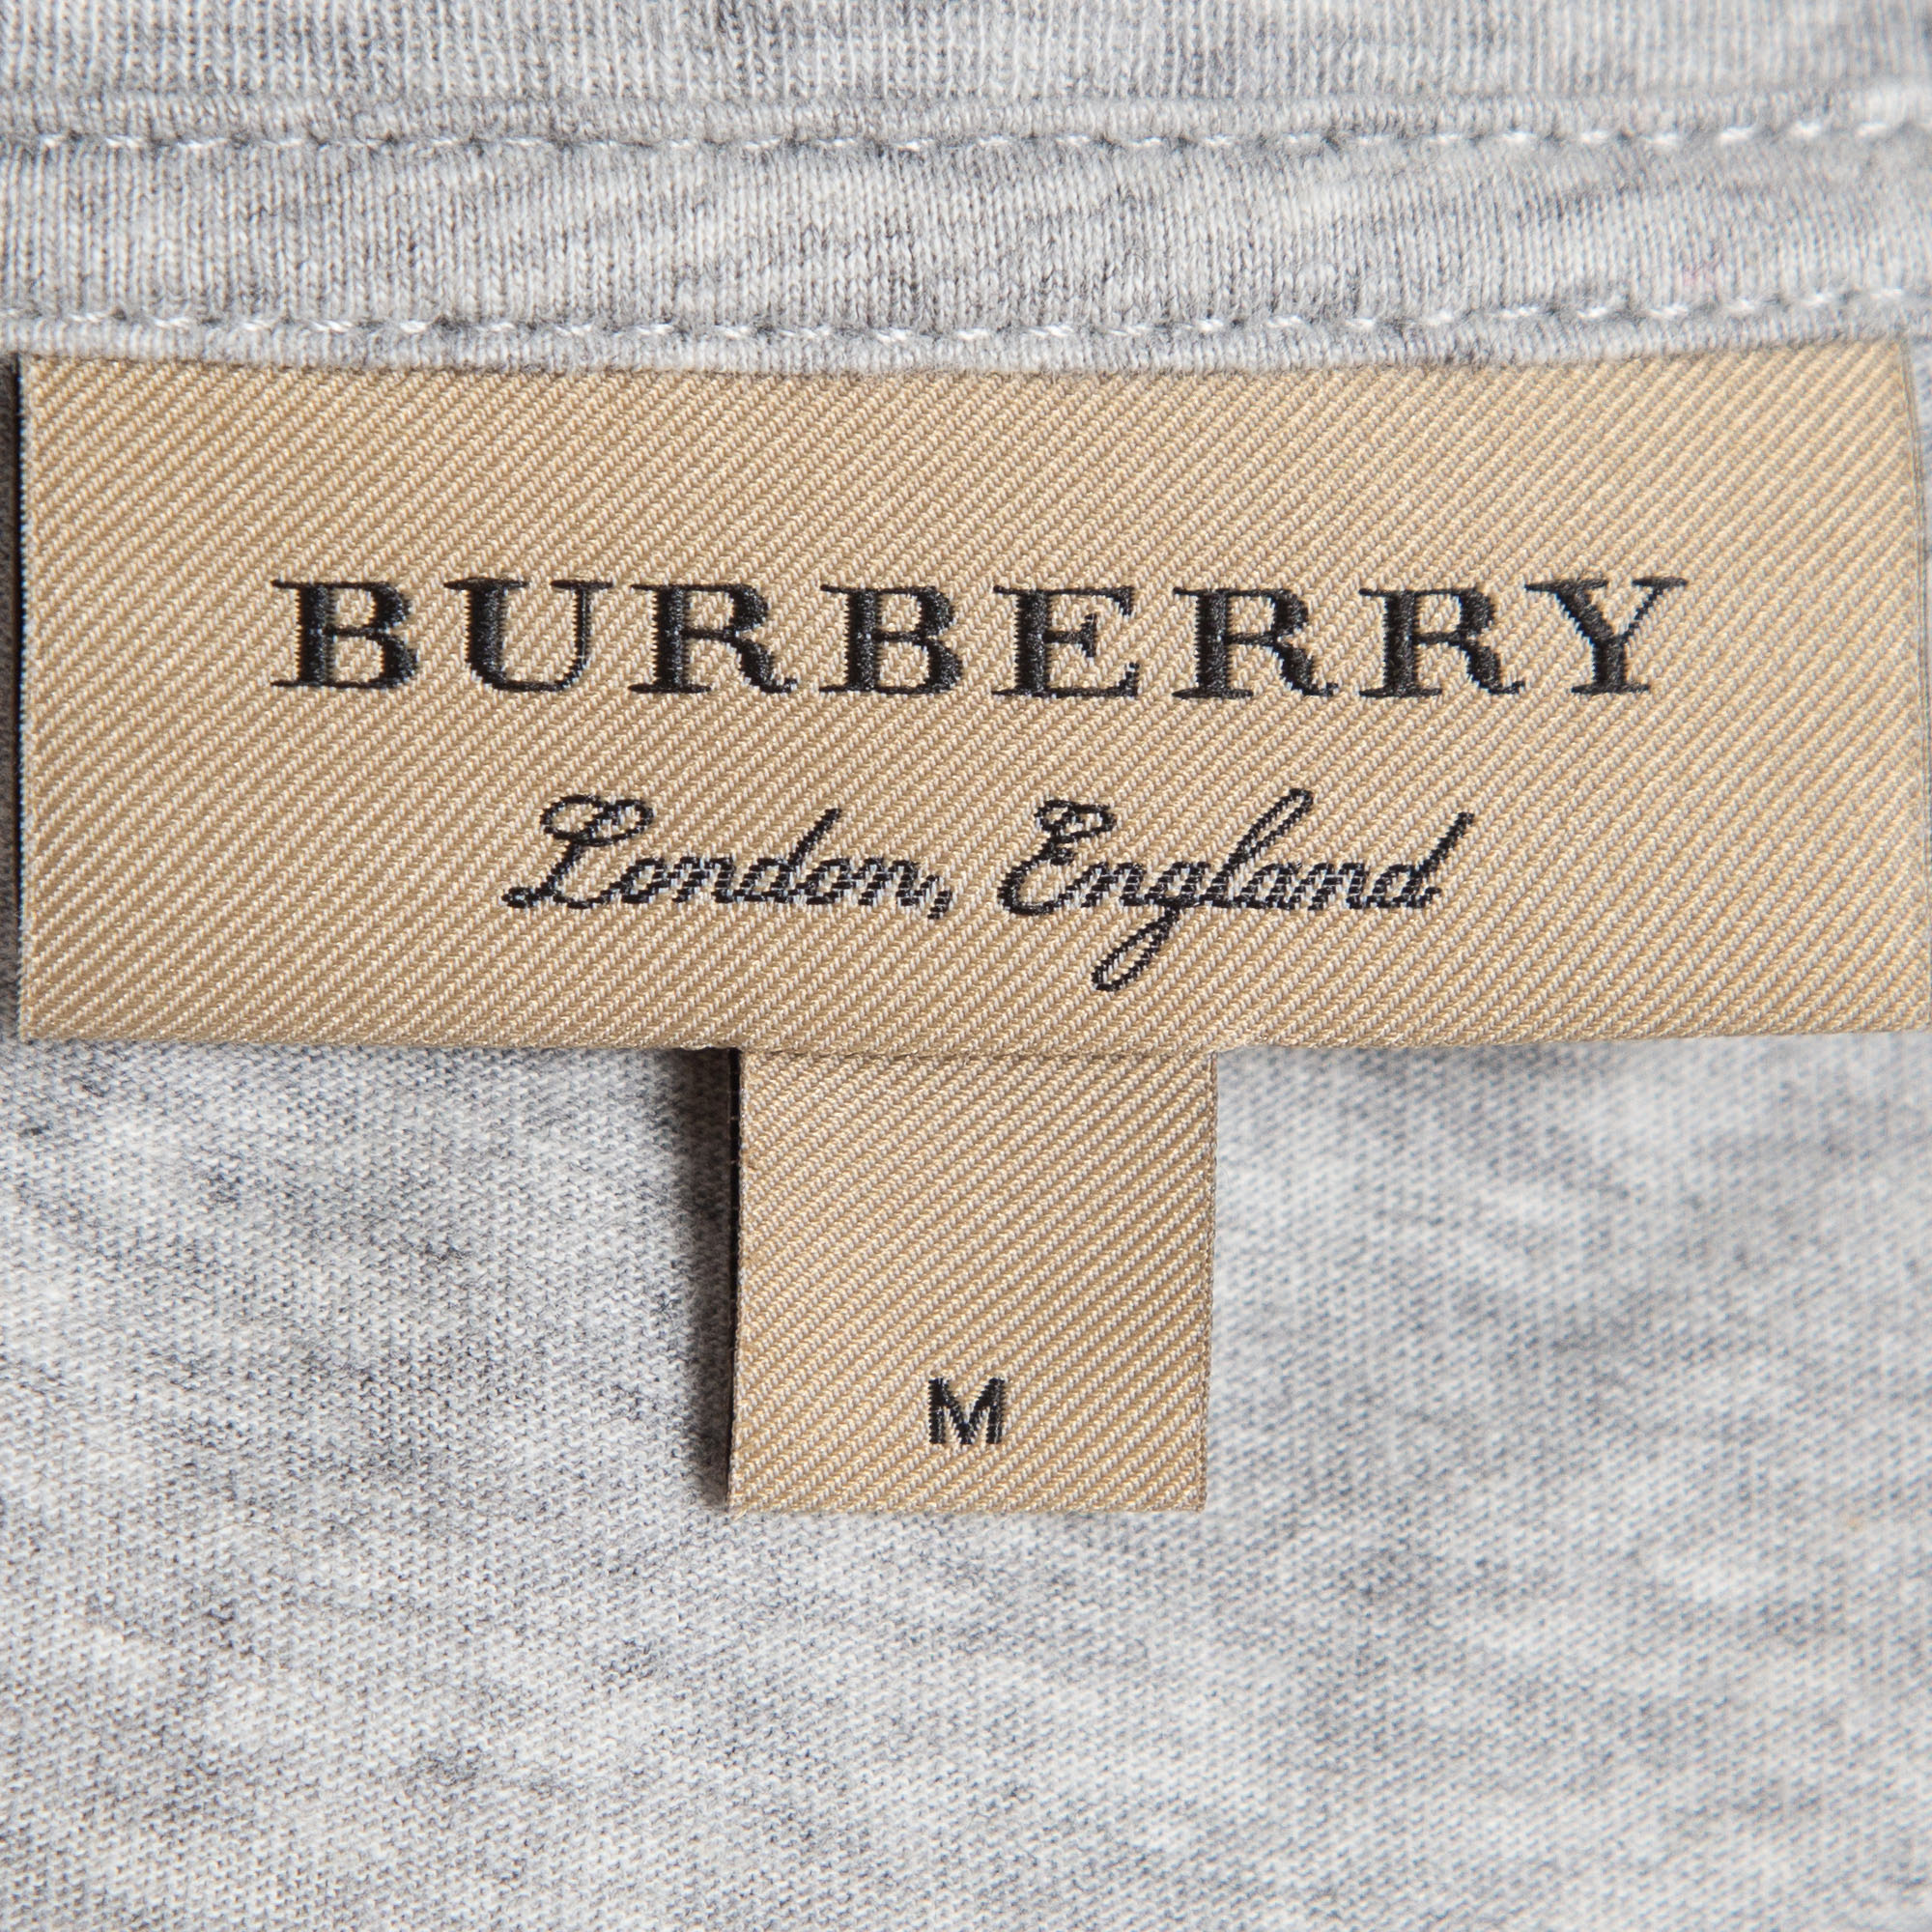 Burberry Grey Embellished Creature Motif Cotton Crew Neck T-Shirt M